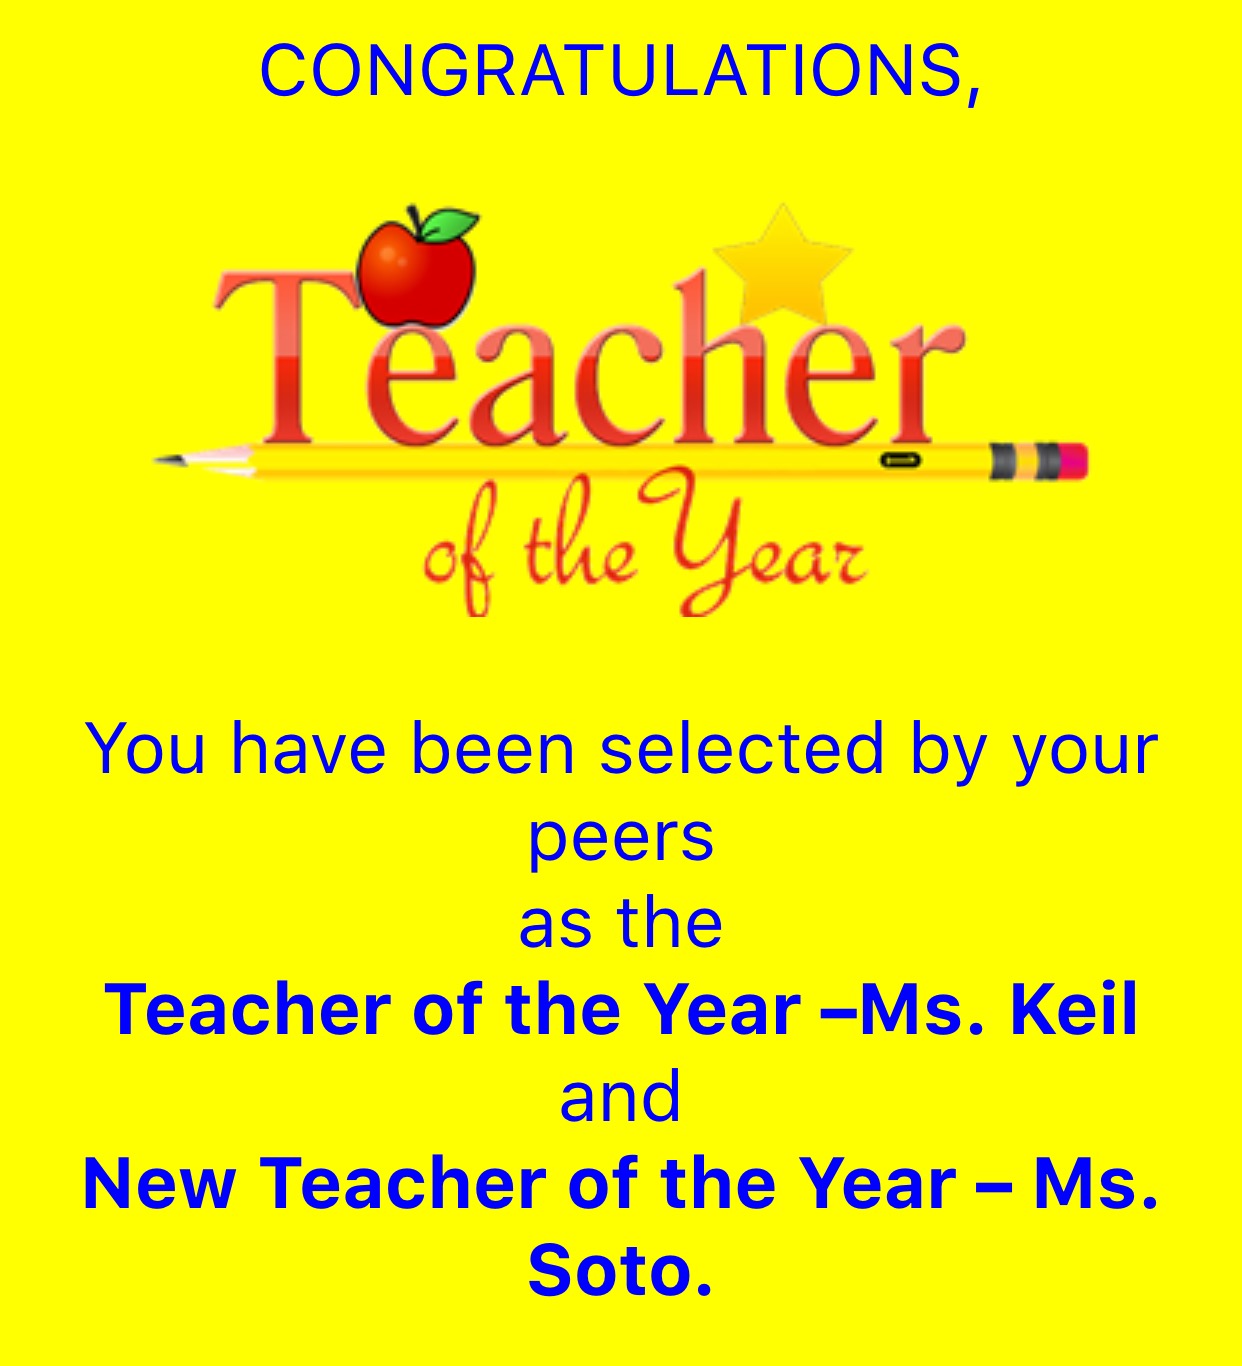 Teacher of the year 2015/2016